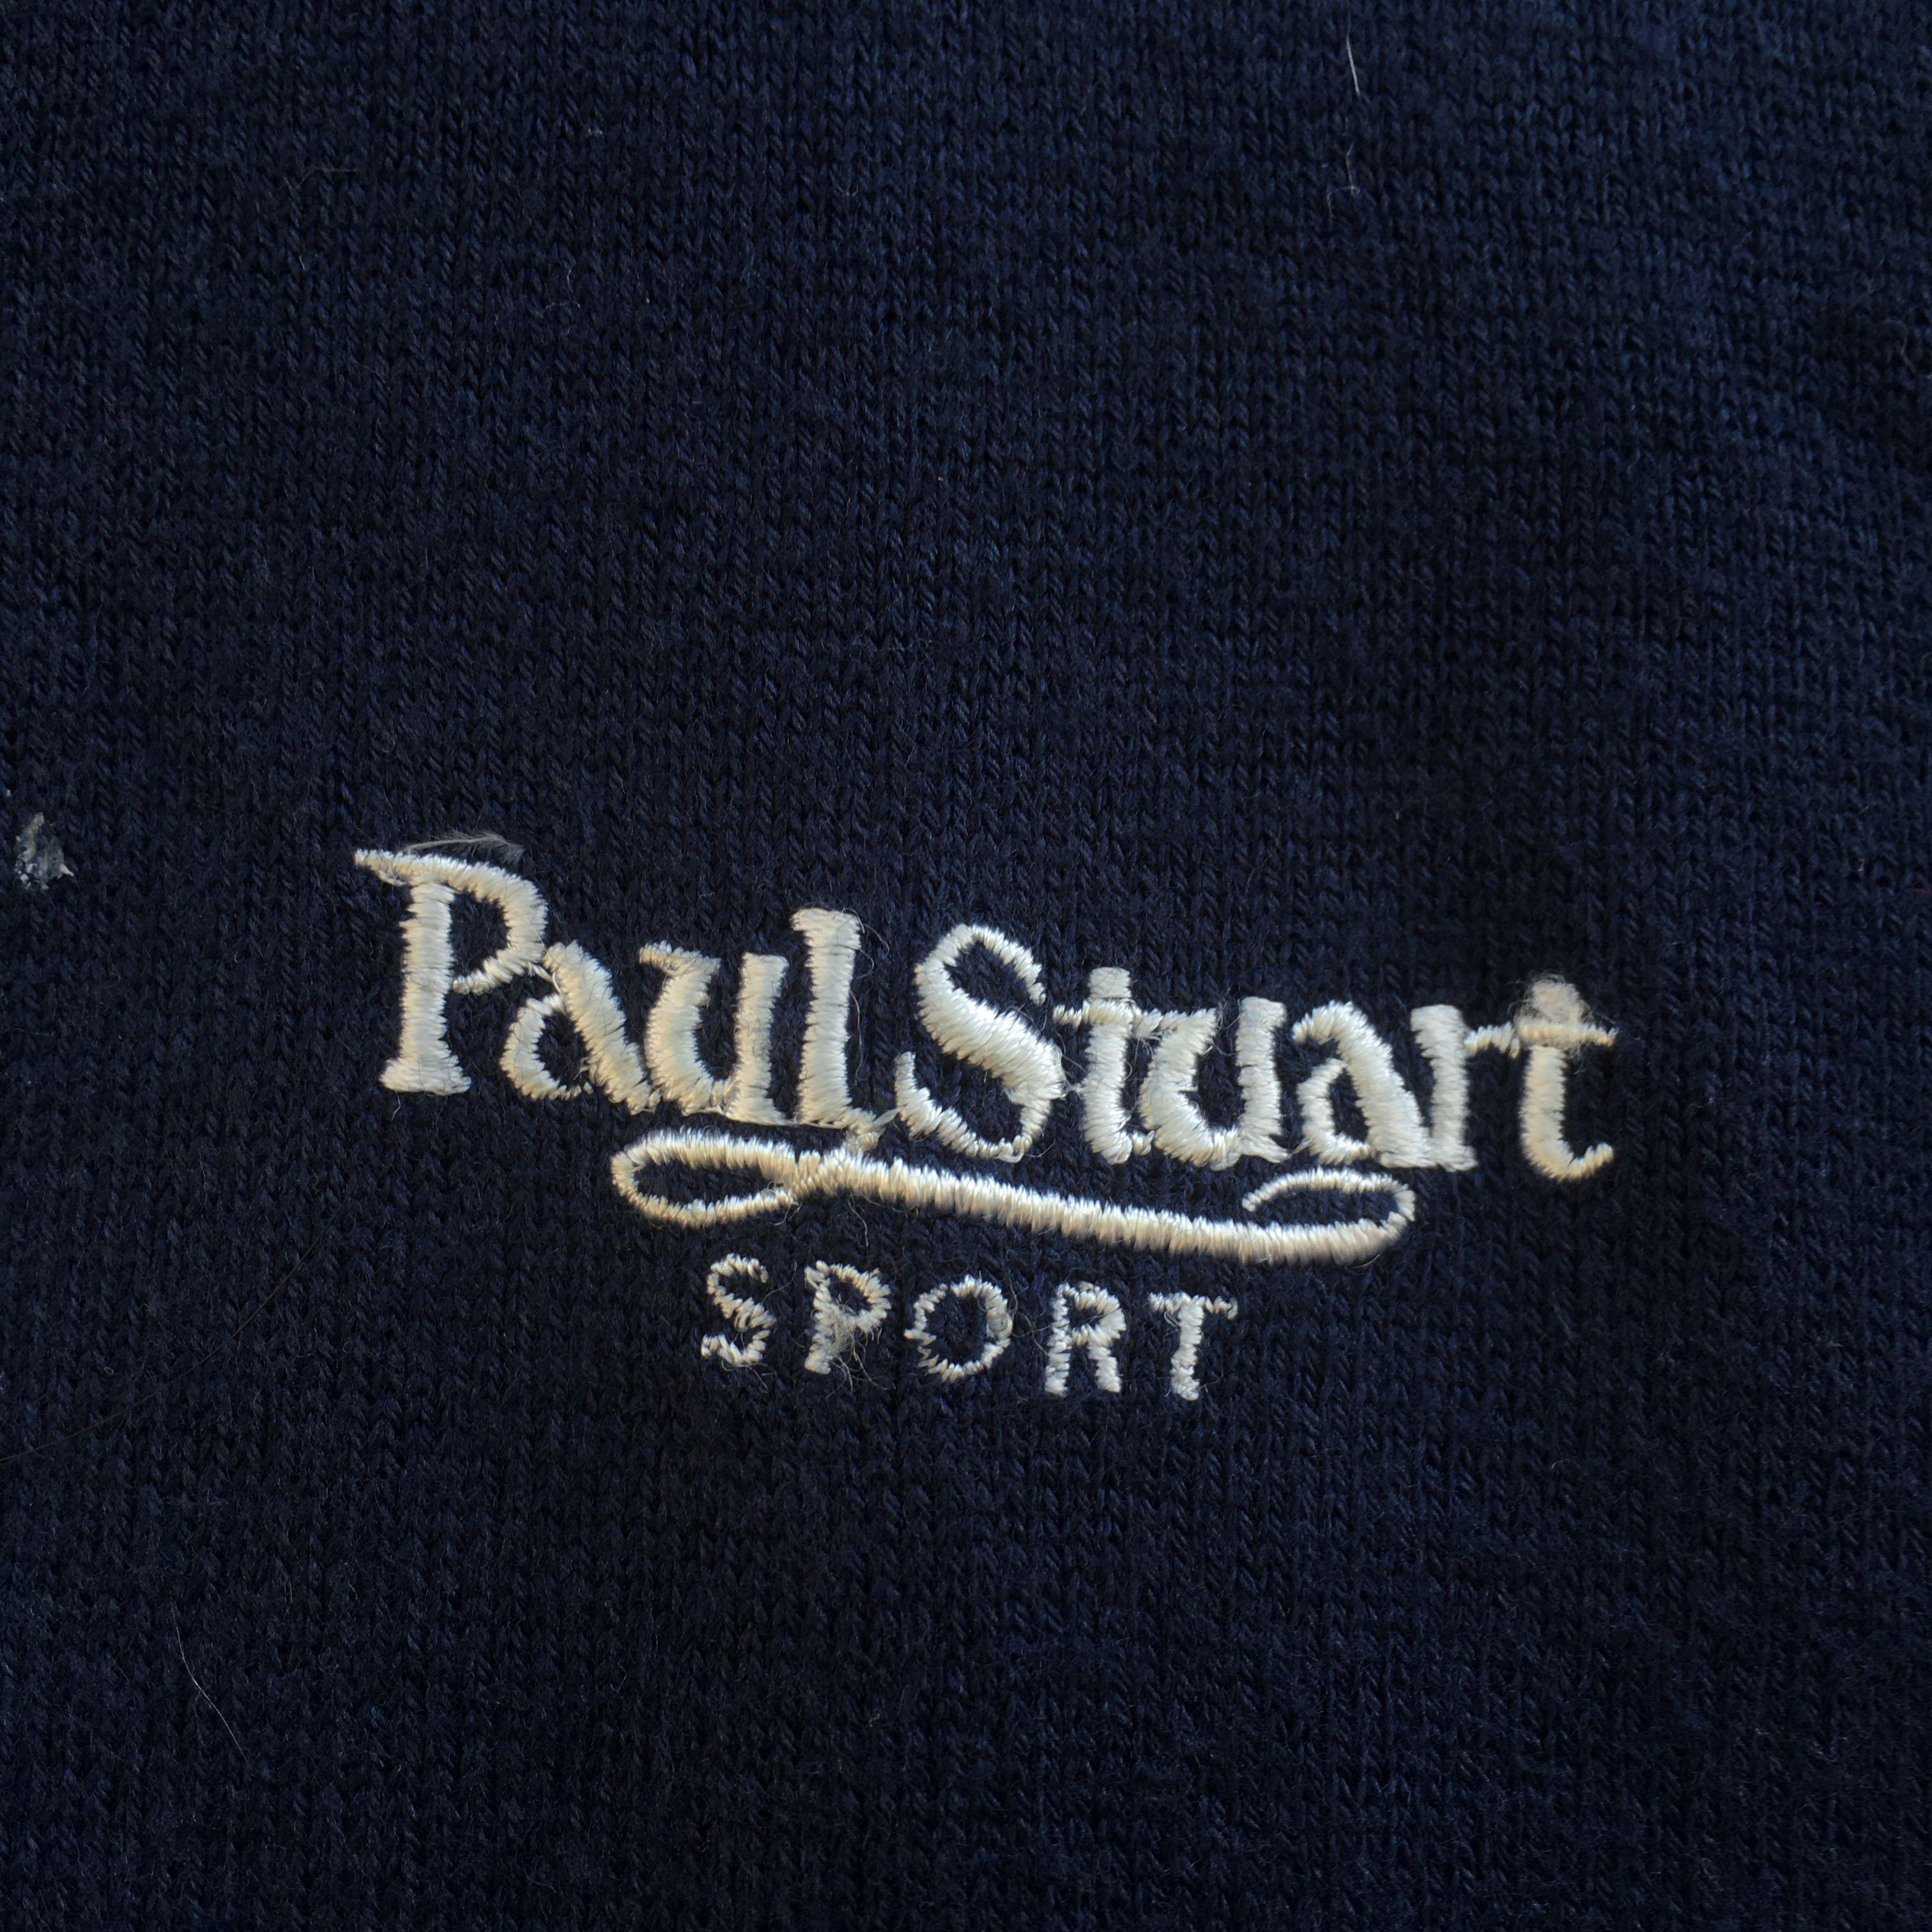 PAUL STUART SPORT LONG SLEEVE TSHIRT, Men's Fashion, Tops & Sets